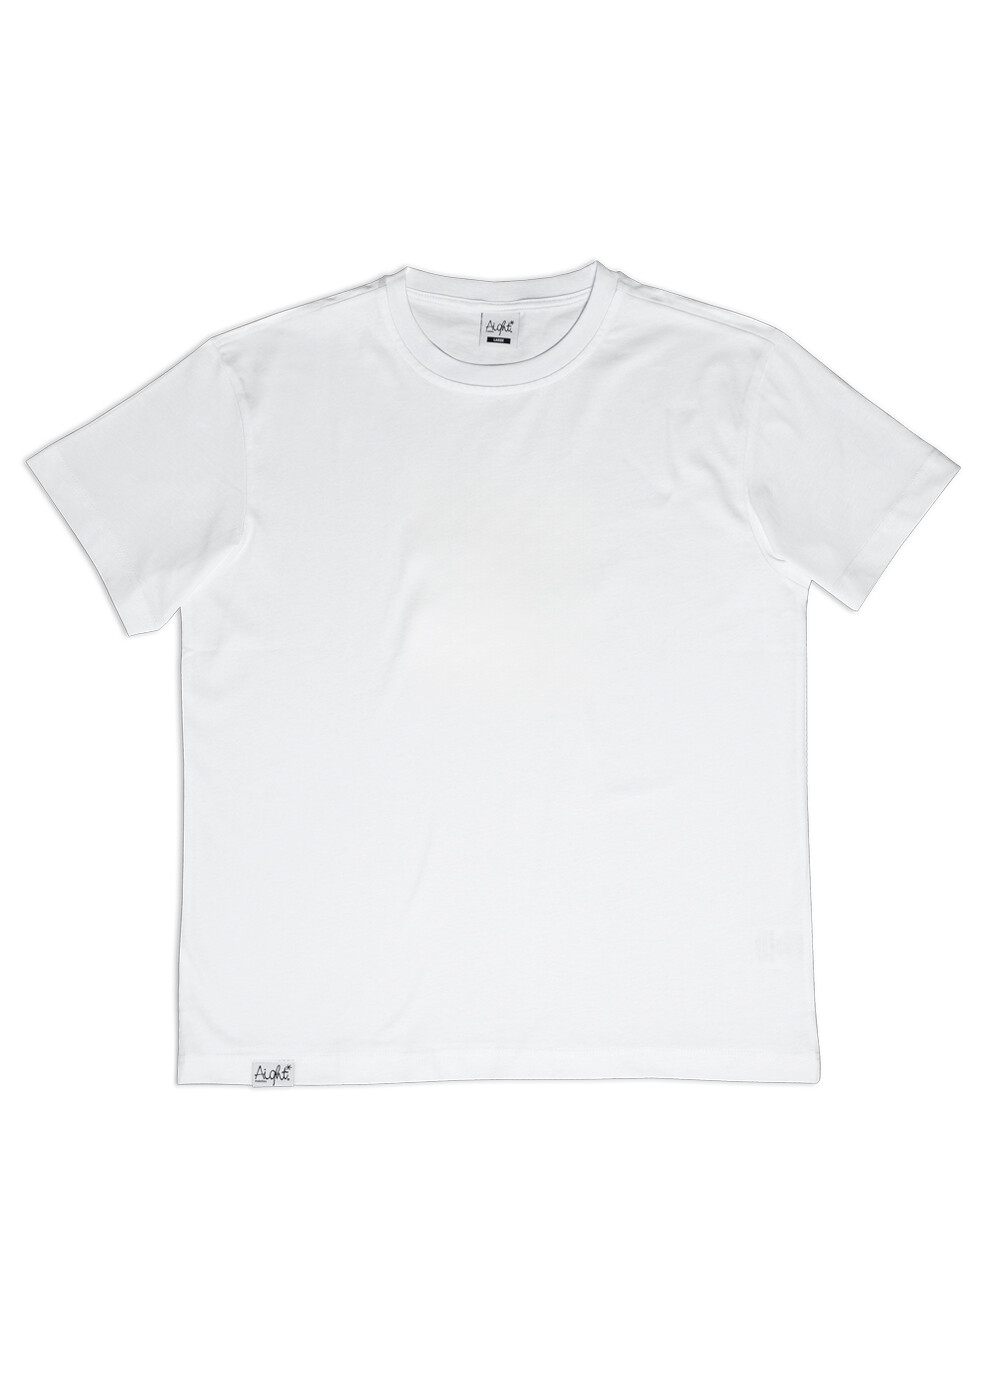 Aight* T-Shirt - "Blank" white